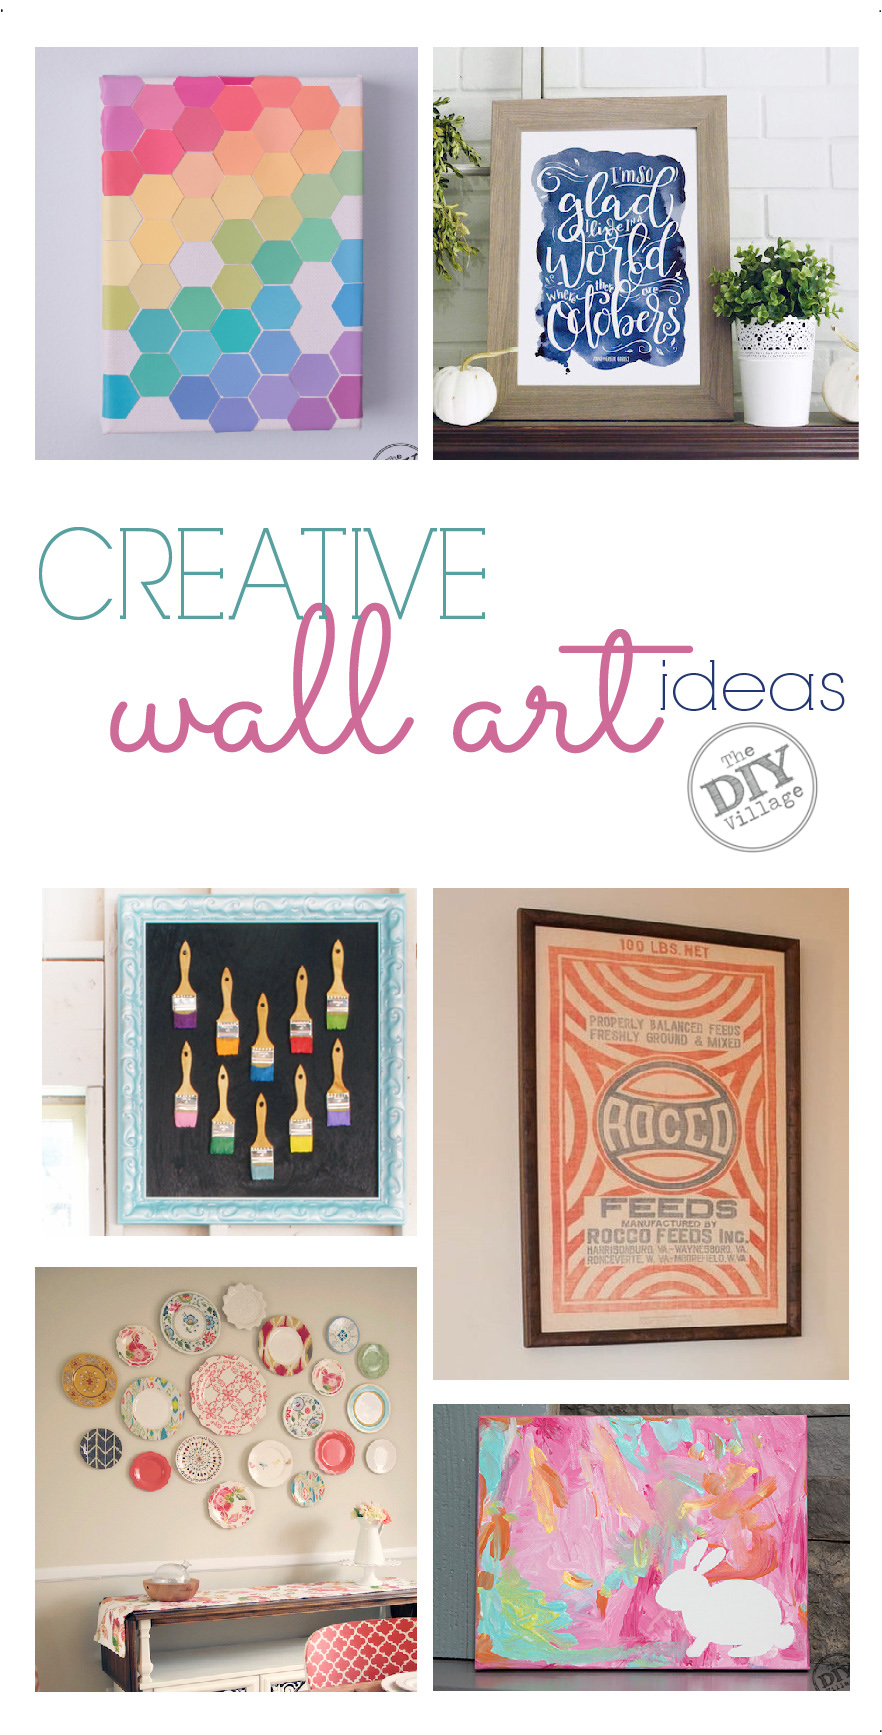 Creative Wall Art Ideas - The DIY Village